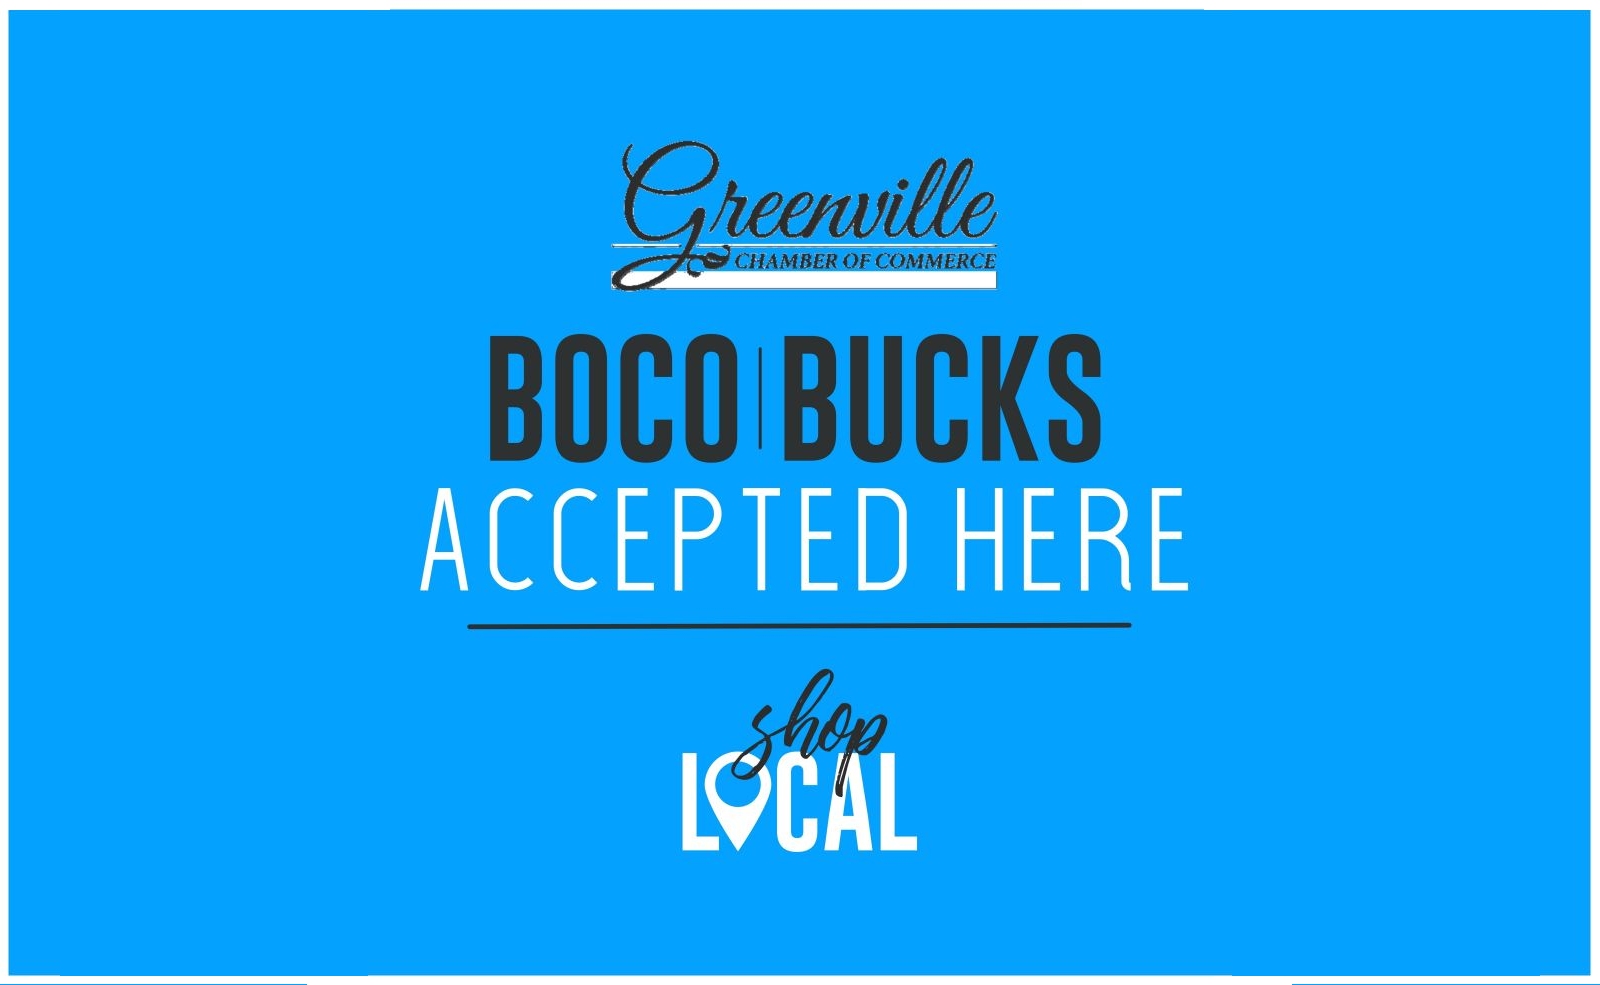 BoCo Bucks Accepted Here, Shop Local initiative